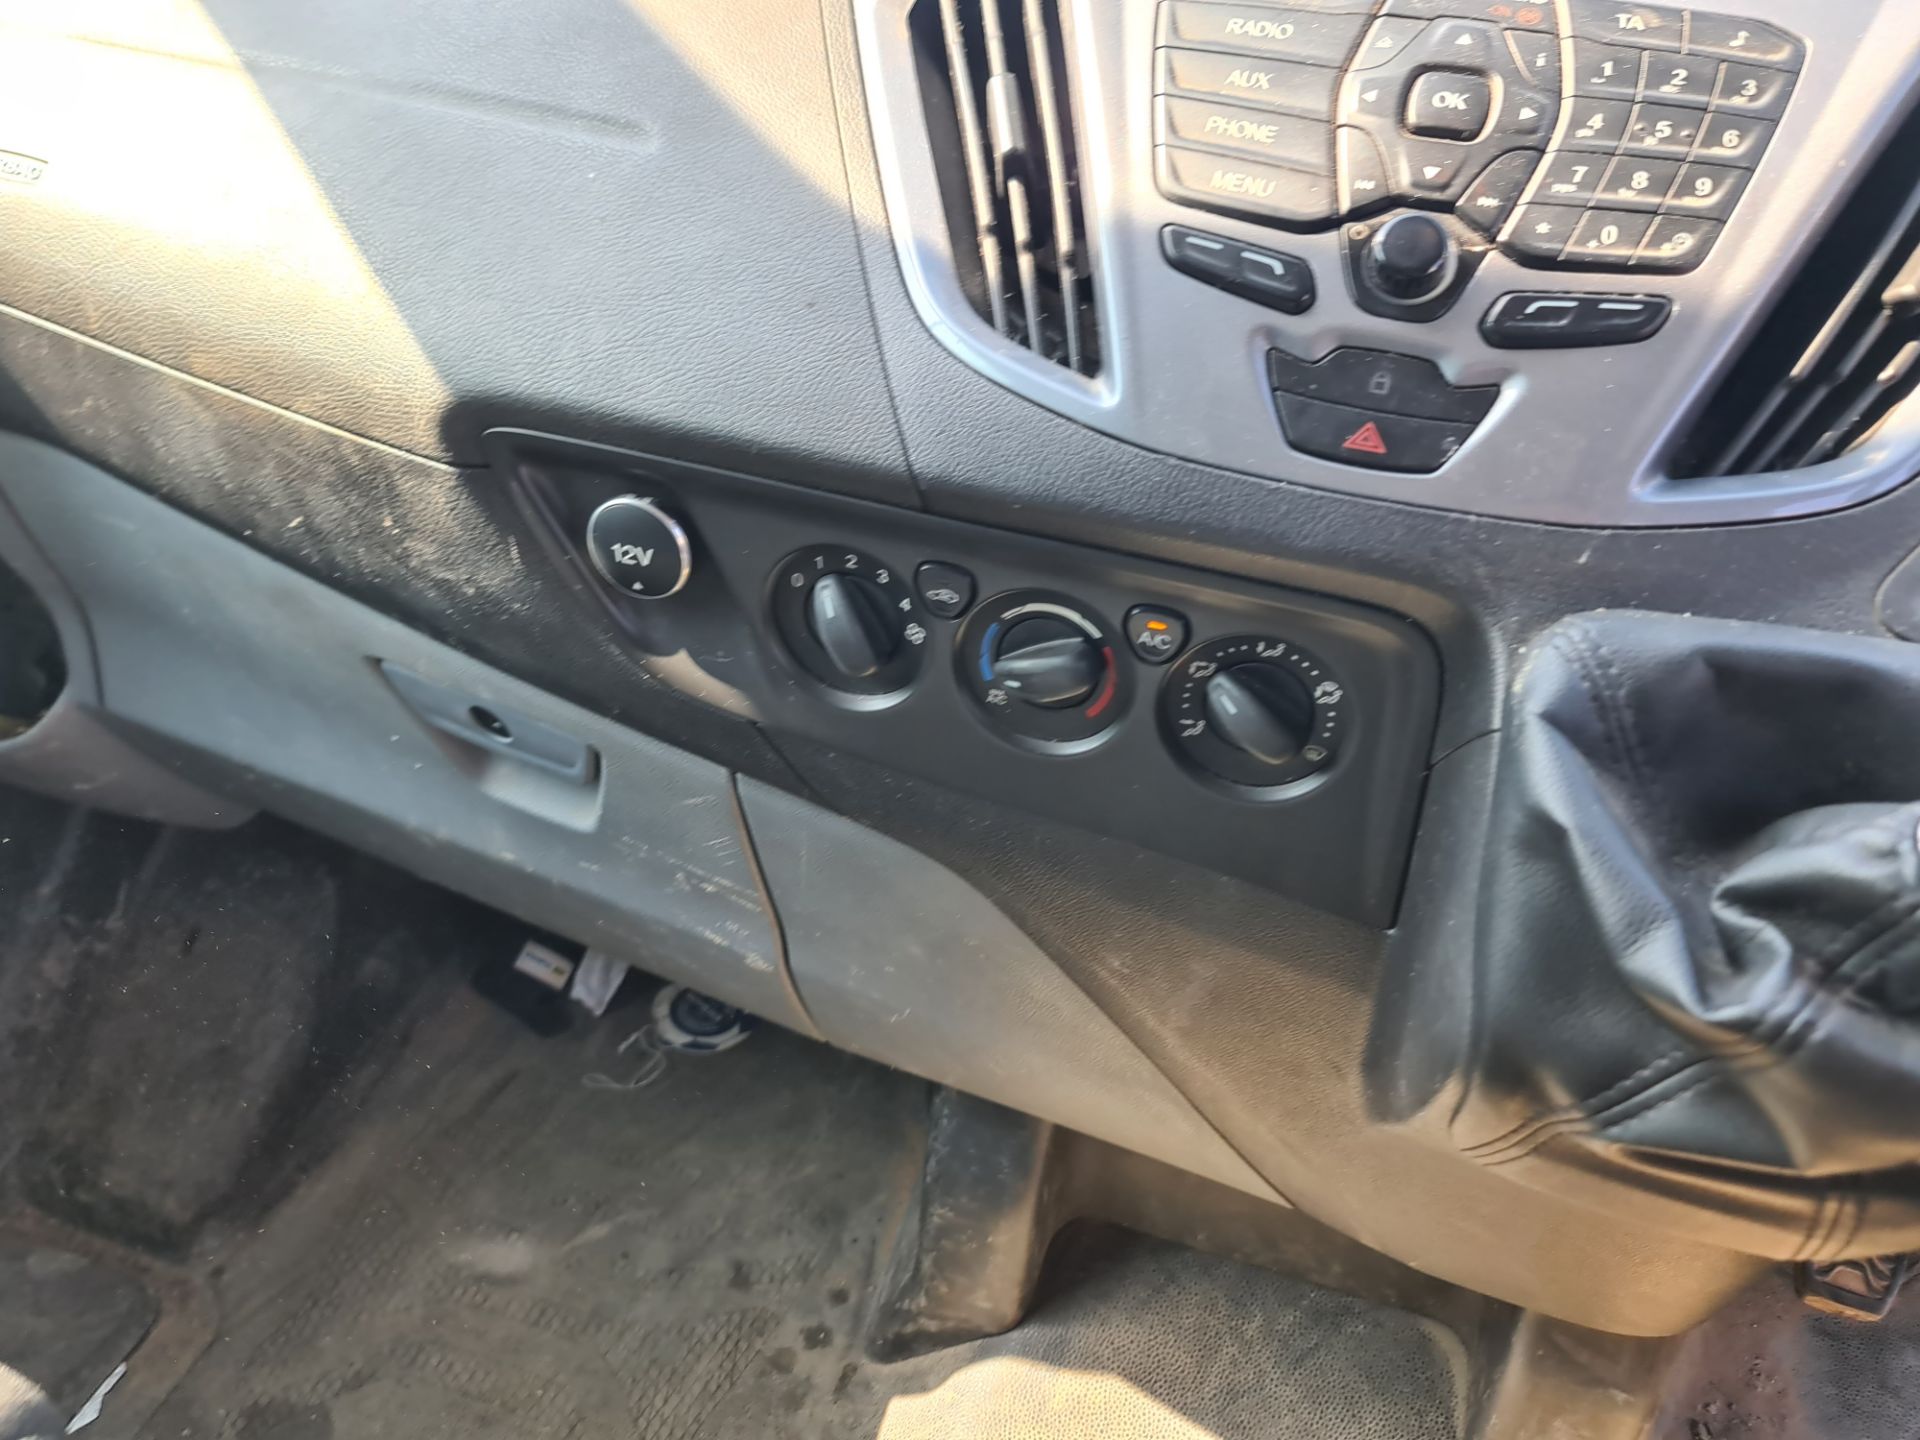 2016 Ford Transit Custom 290 LTD E-Tech panel van - Image 44 of 74